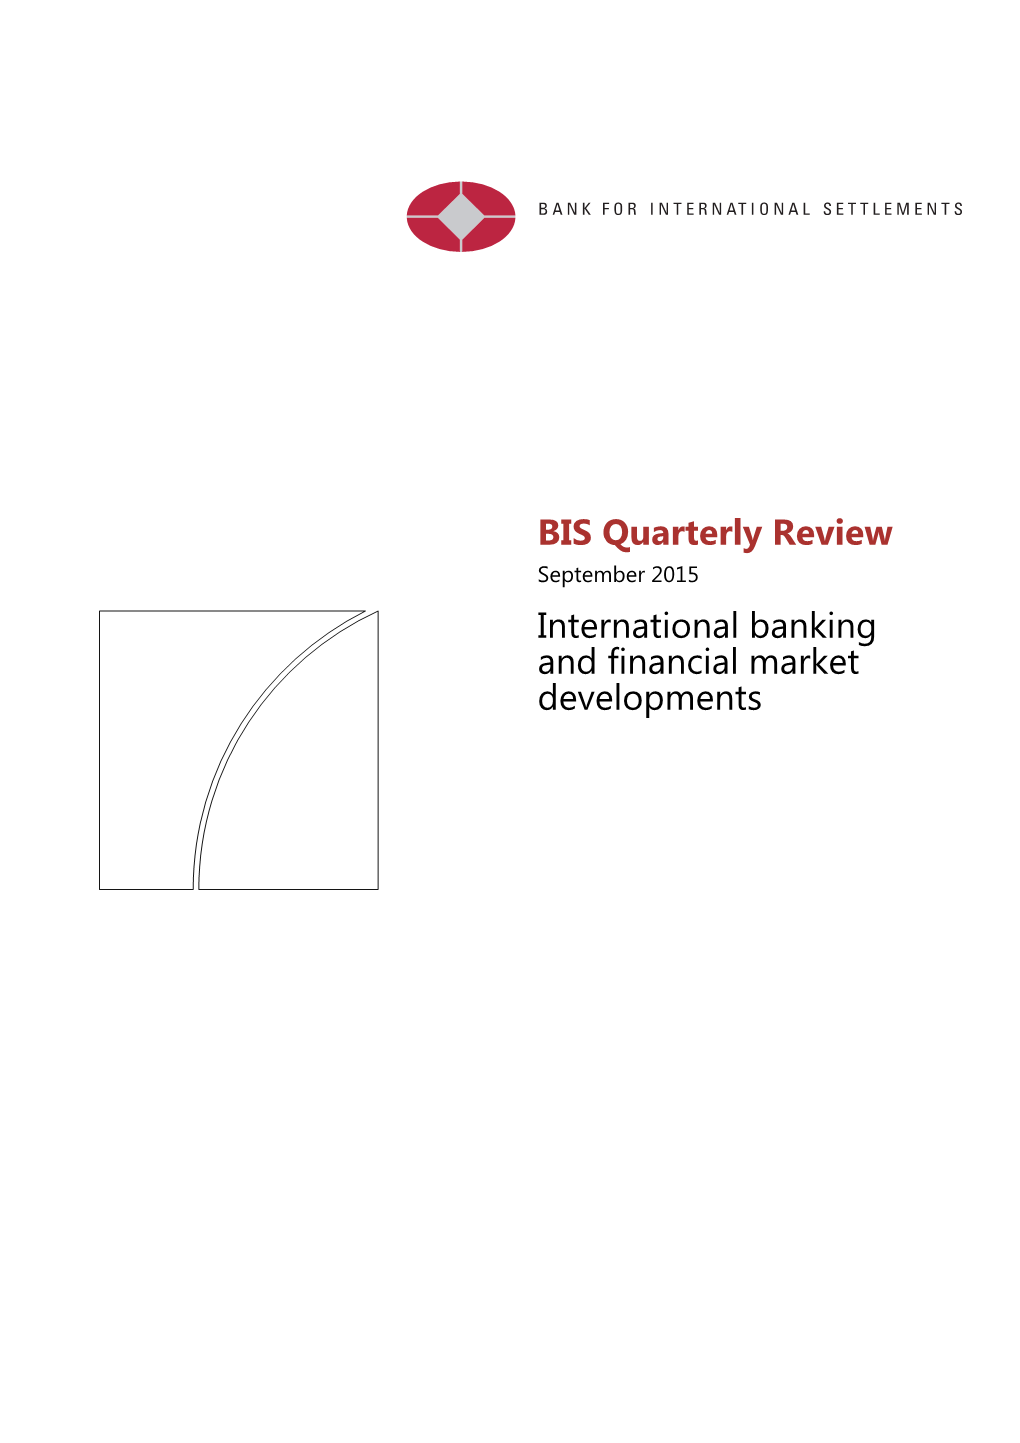 BIS Quarterly Review September 2015 International Banking and Financial Market Developments